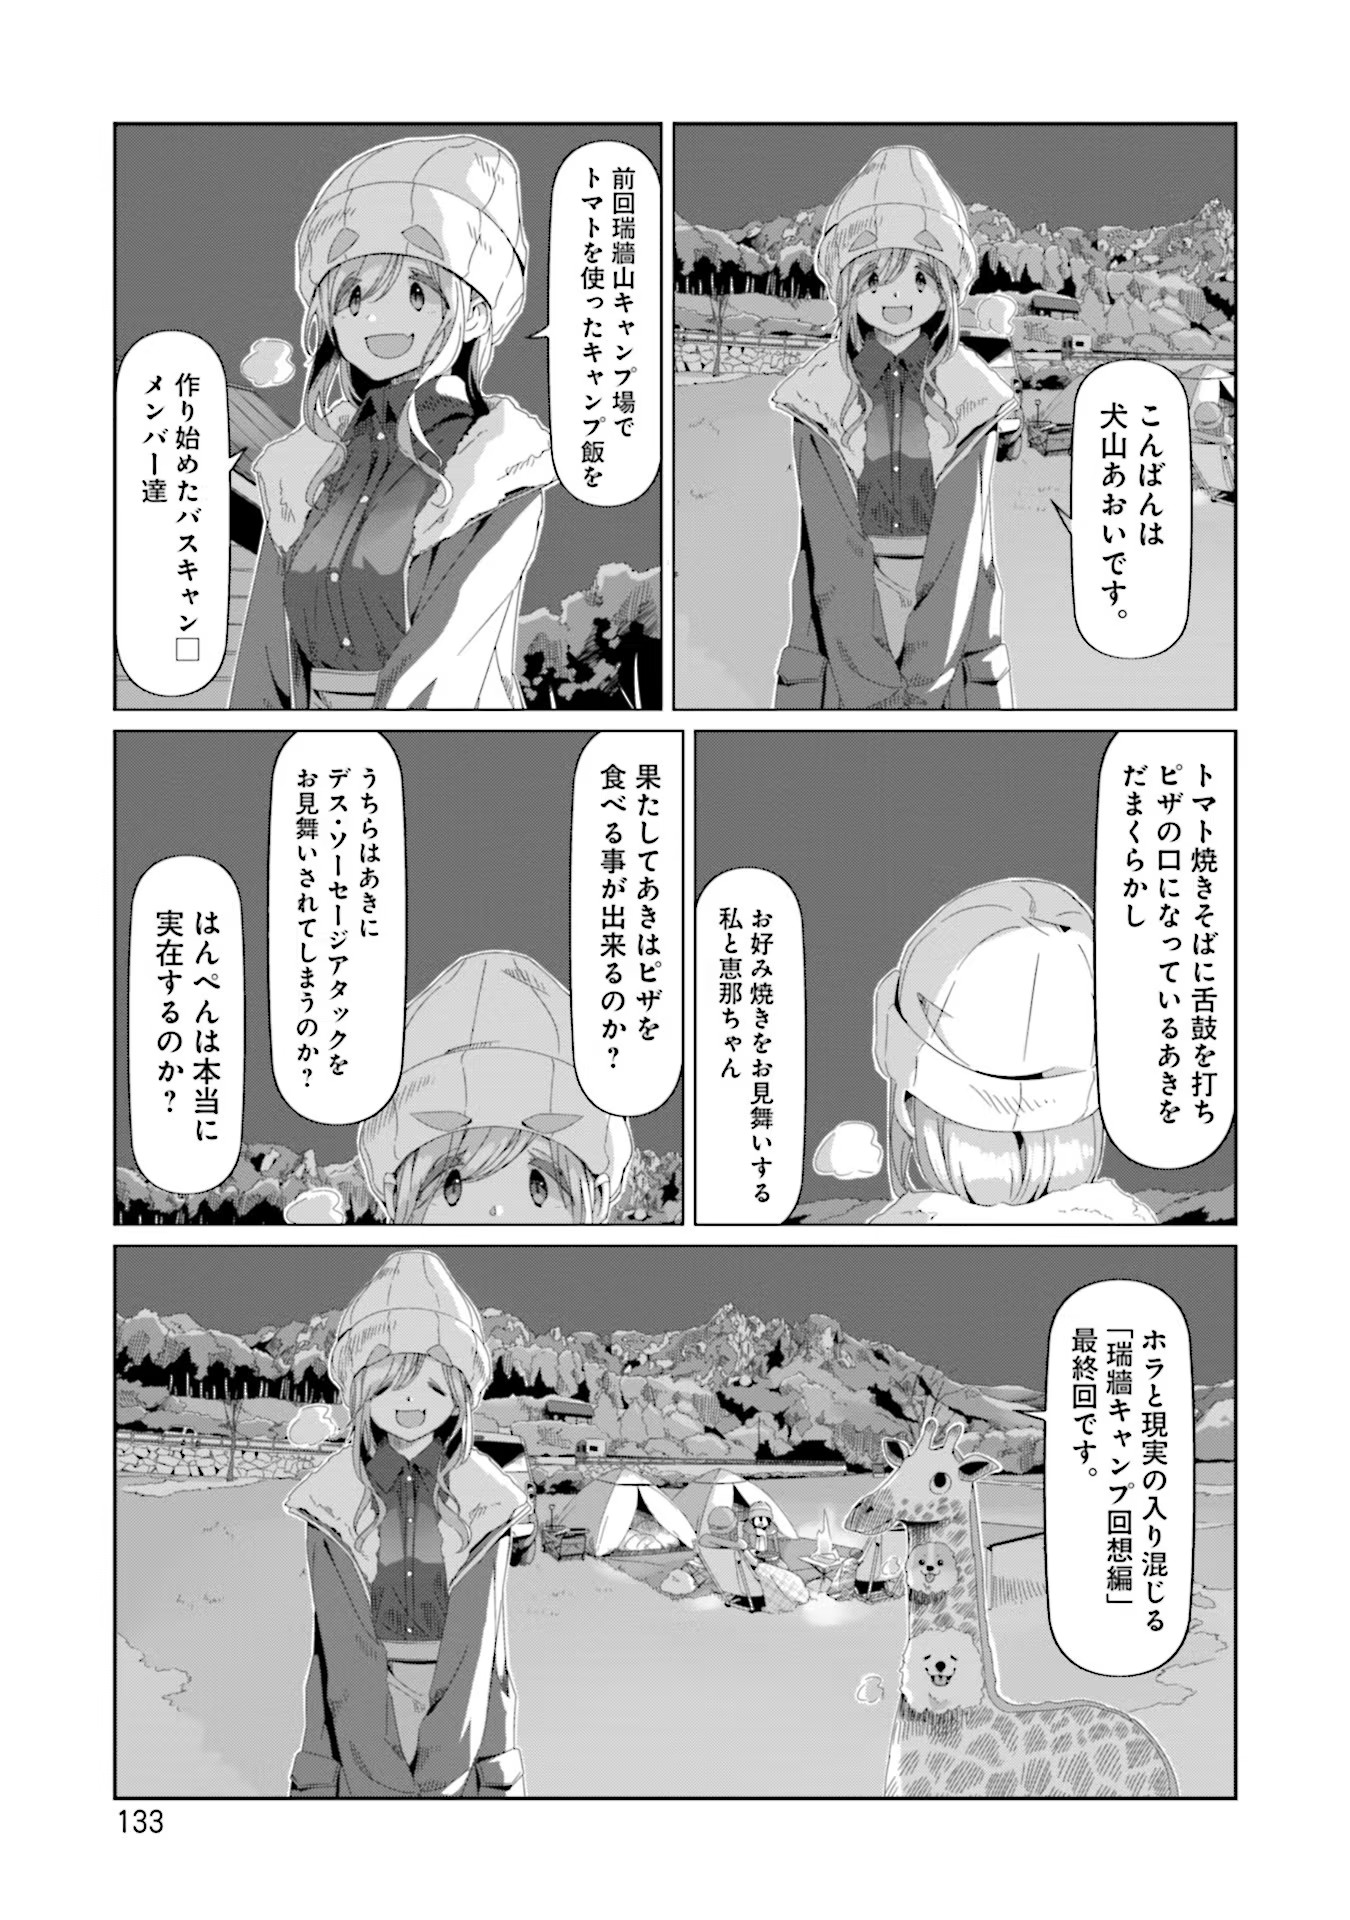 Yuru Camp - Chapter 69 - Page 1